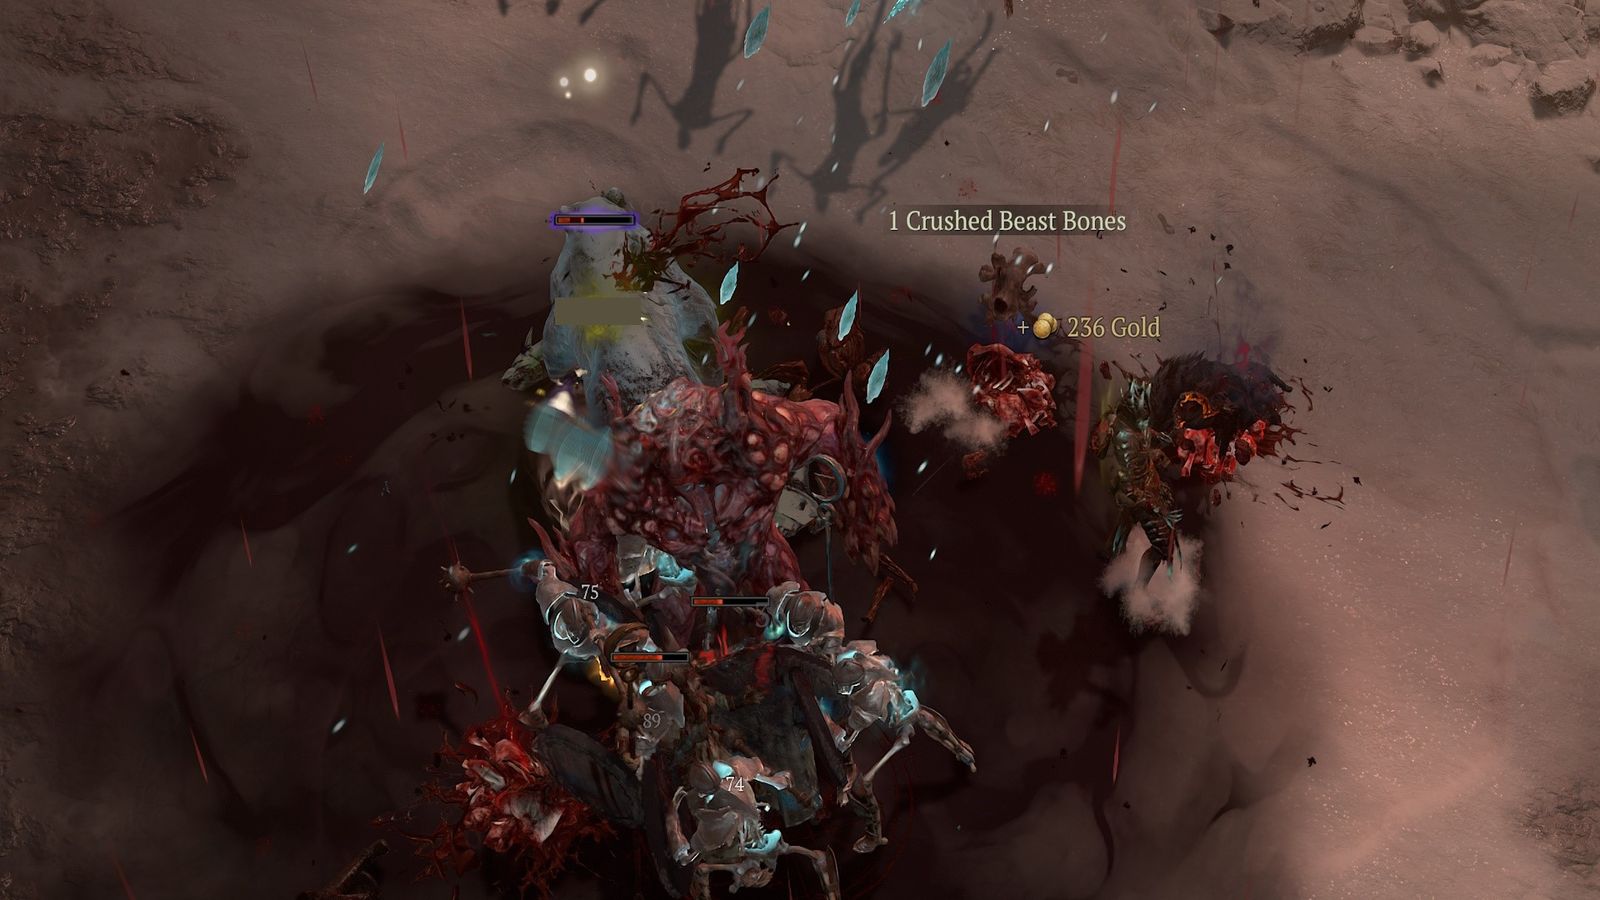 Crushed Beast Bones are important crafting materials in Diablo 4.